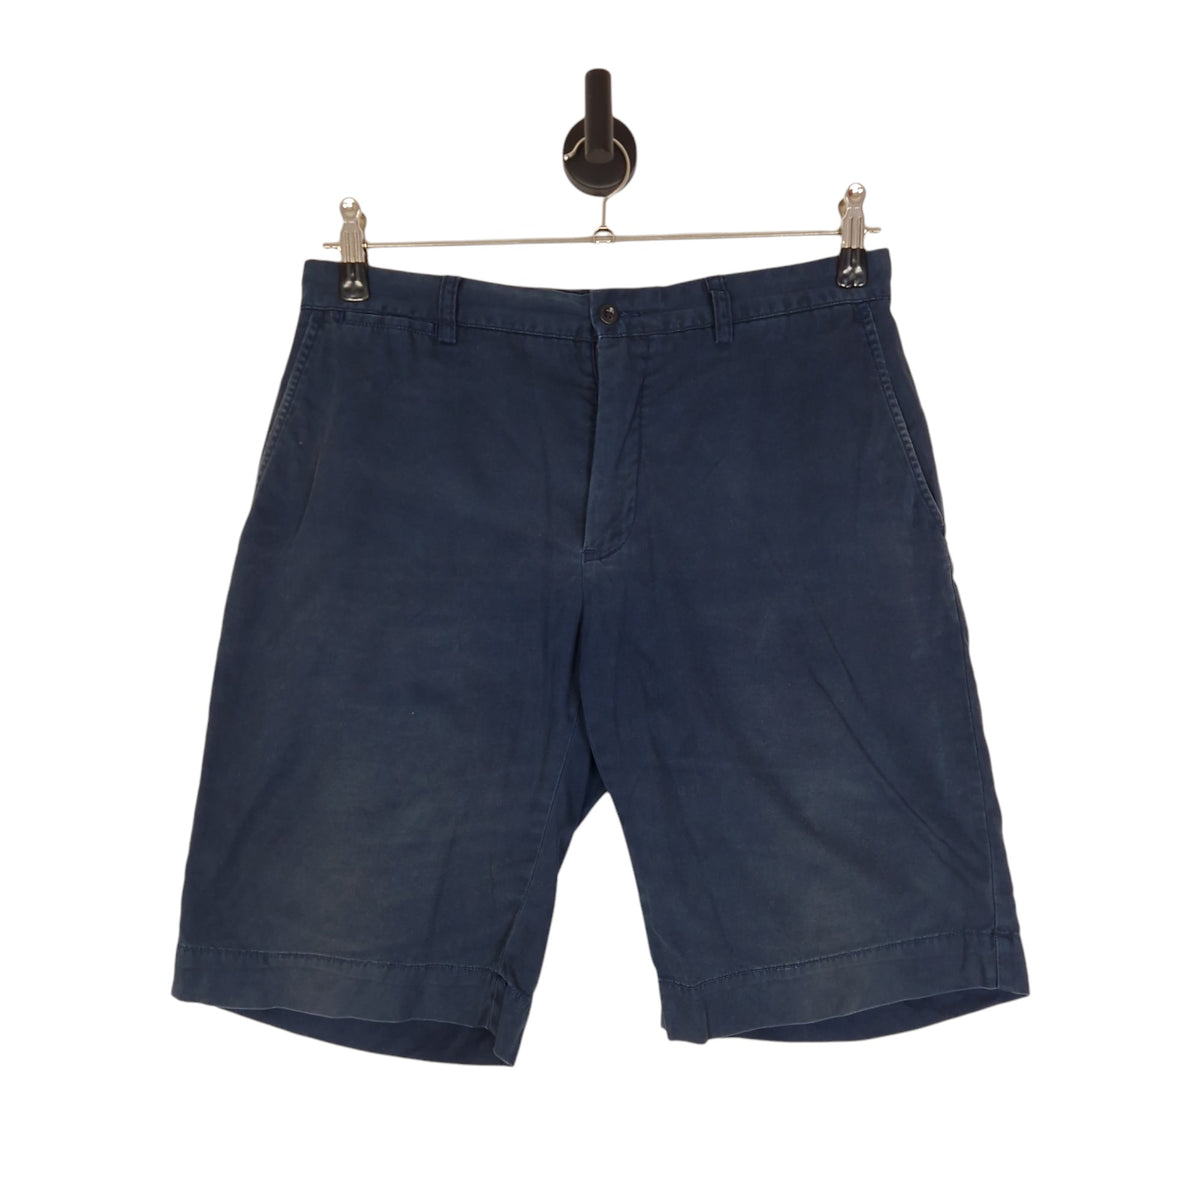 Polo Ralph Lauren Chino Shorts - Size W33